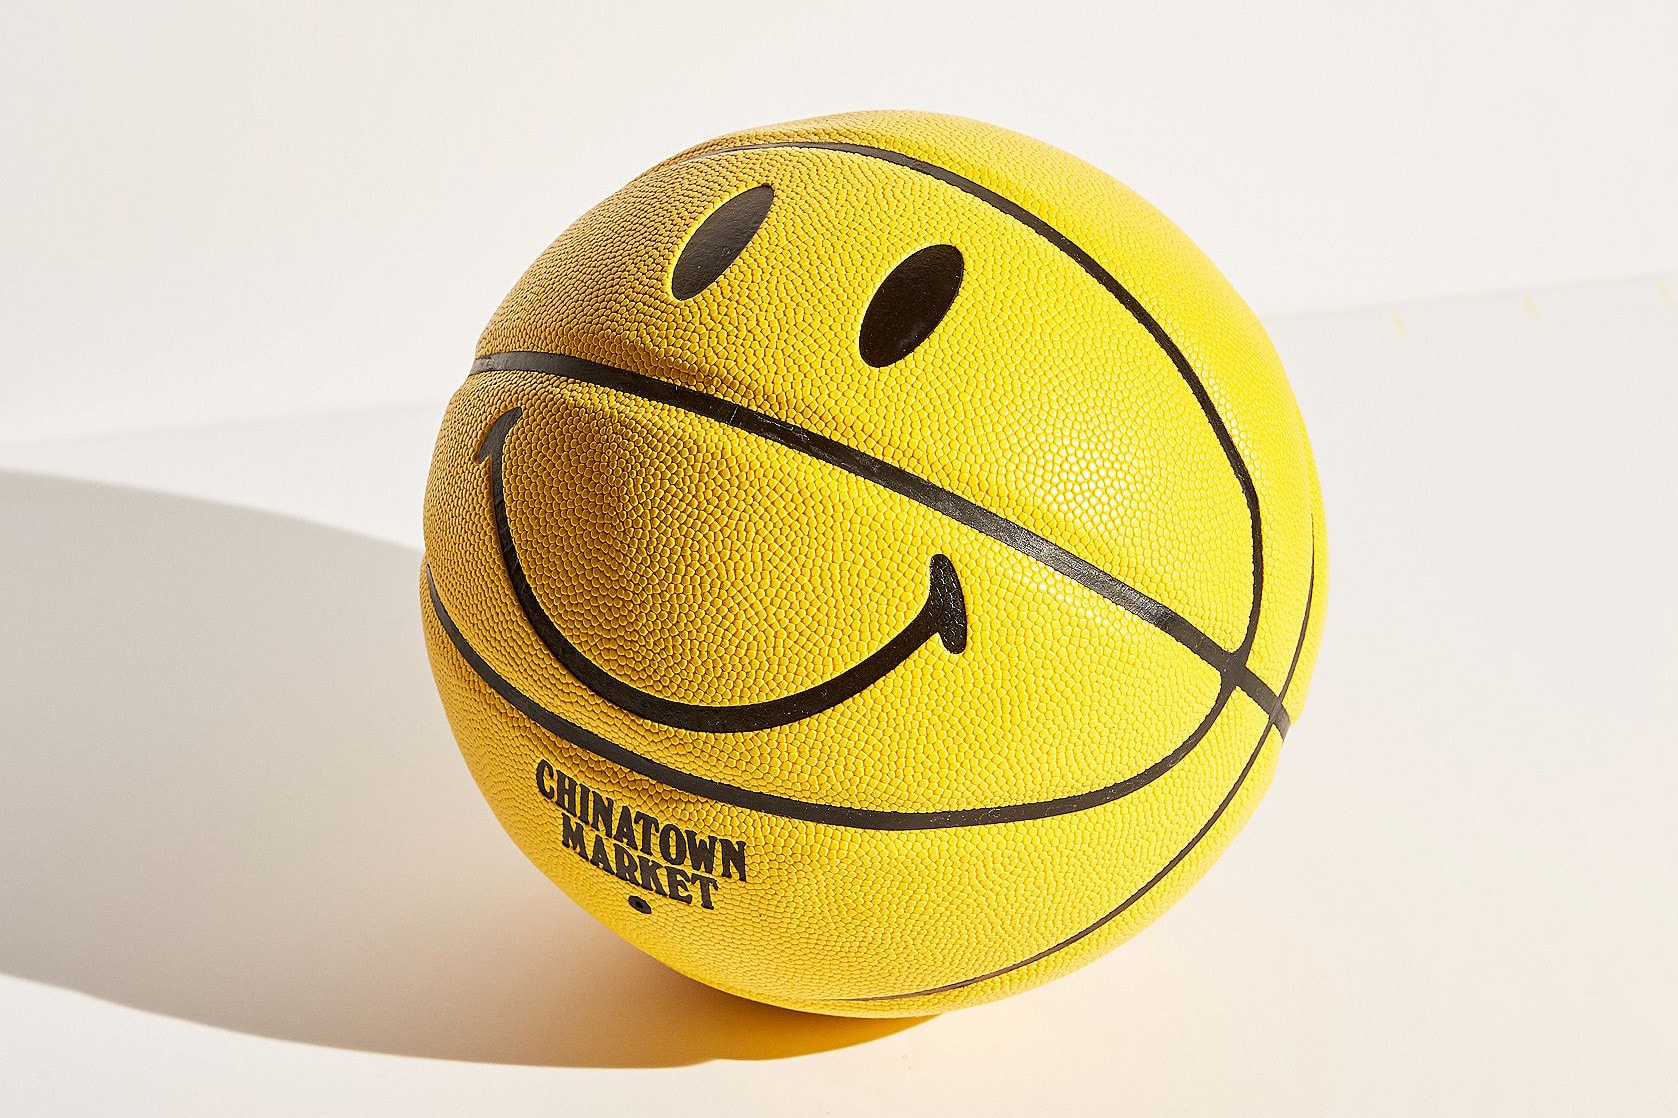 Chinatown Market 推出玩味 Smiley Face 籃球